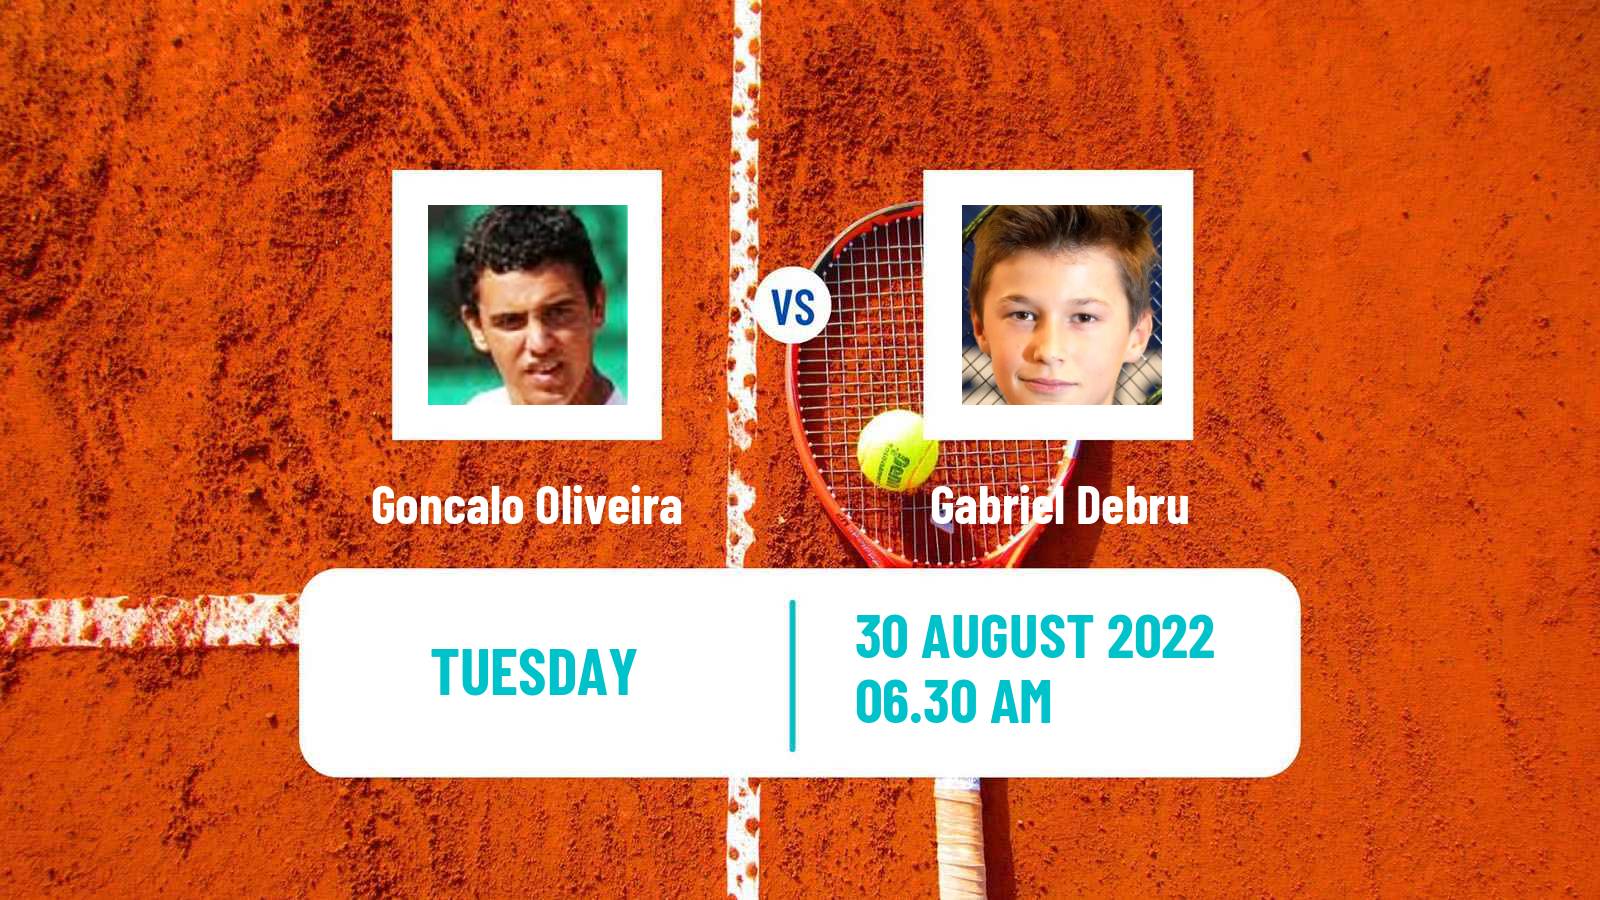 Tennis ITF Tournaments Goncalo Oliveira - Gabriel Debru